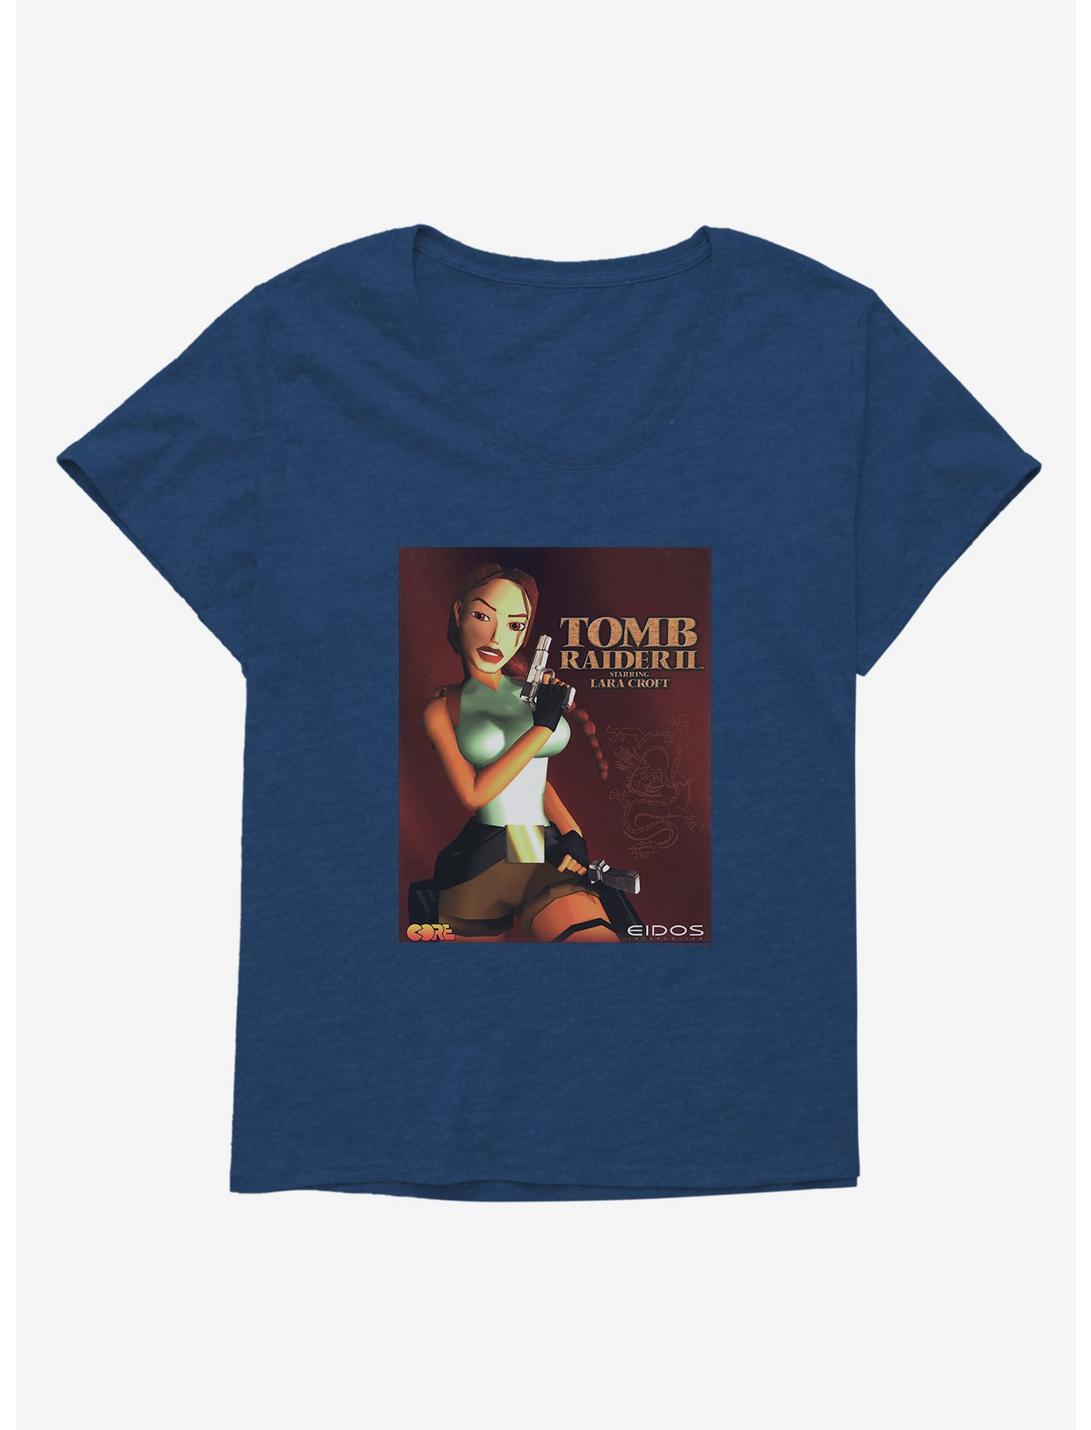 Tomb Raider II Title Logo Girls T-Shirt Plus Size, , hi-res